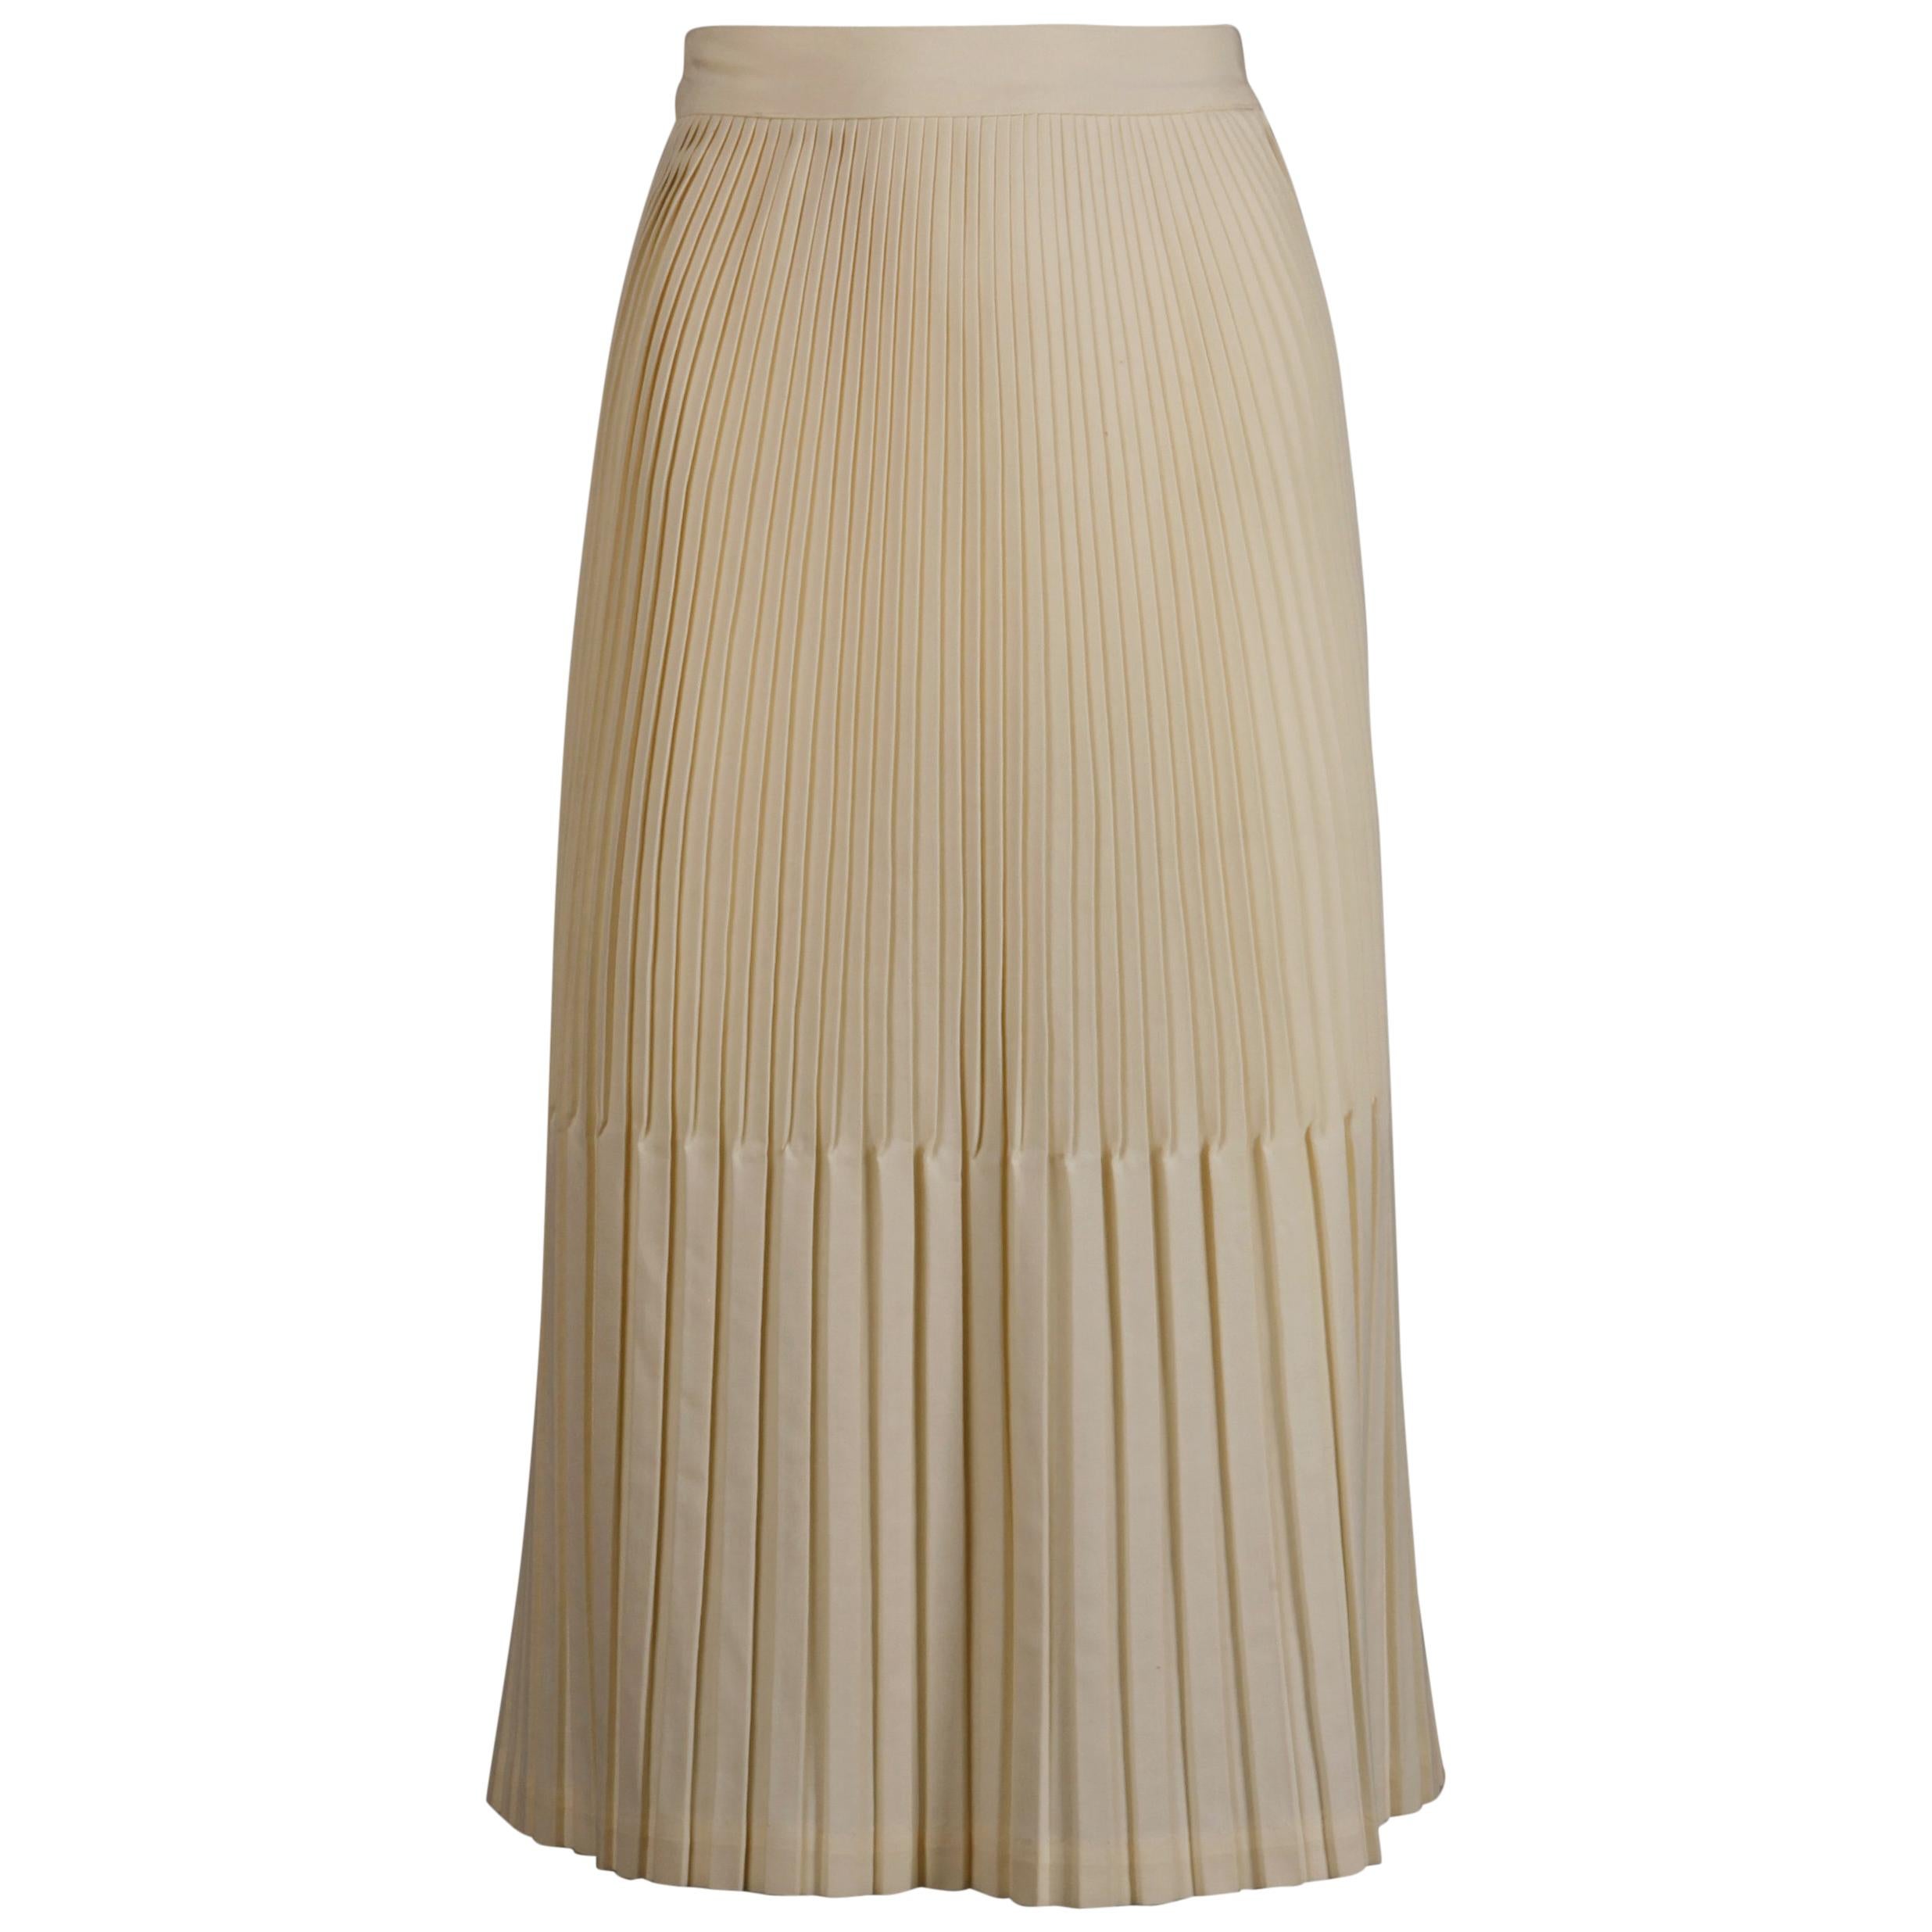 1940s Vintage Off White/ Cream Cotton Pleated High Waist Pencil Skirt